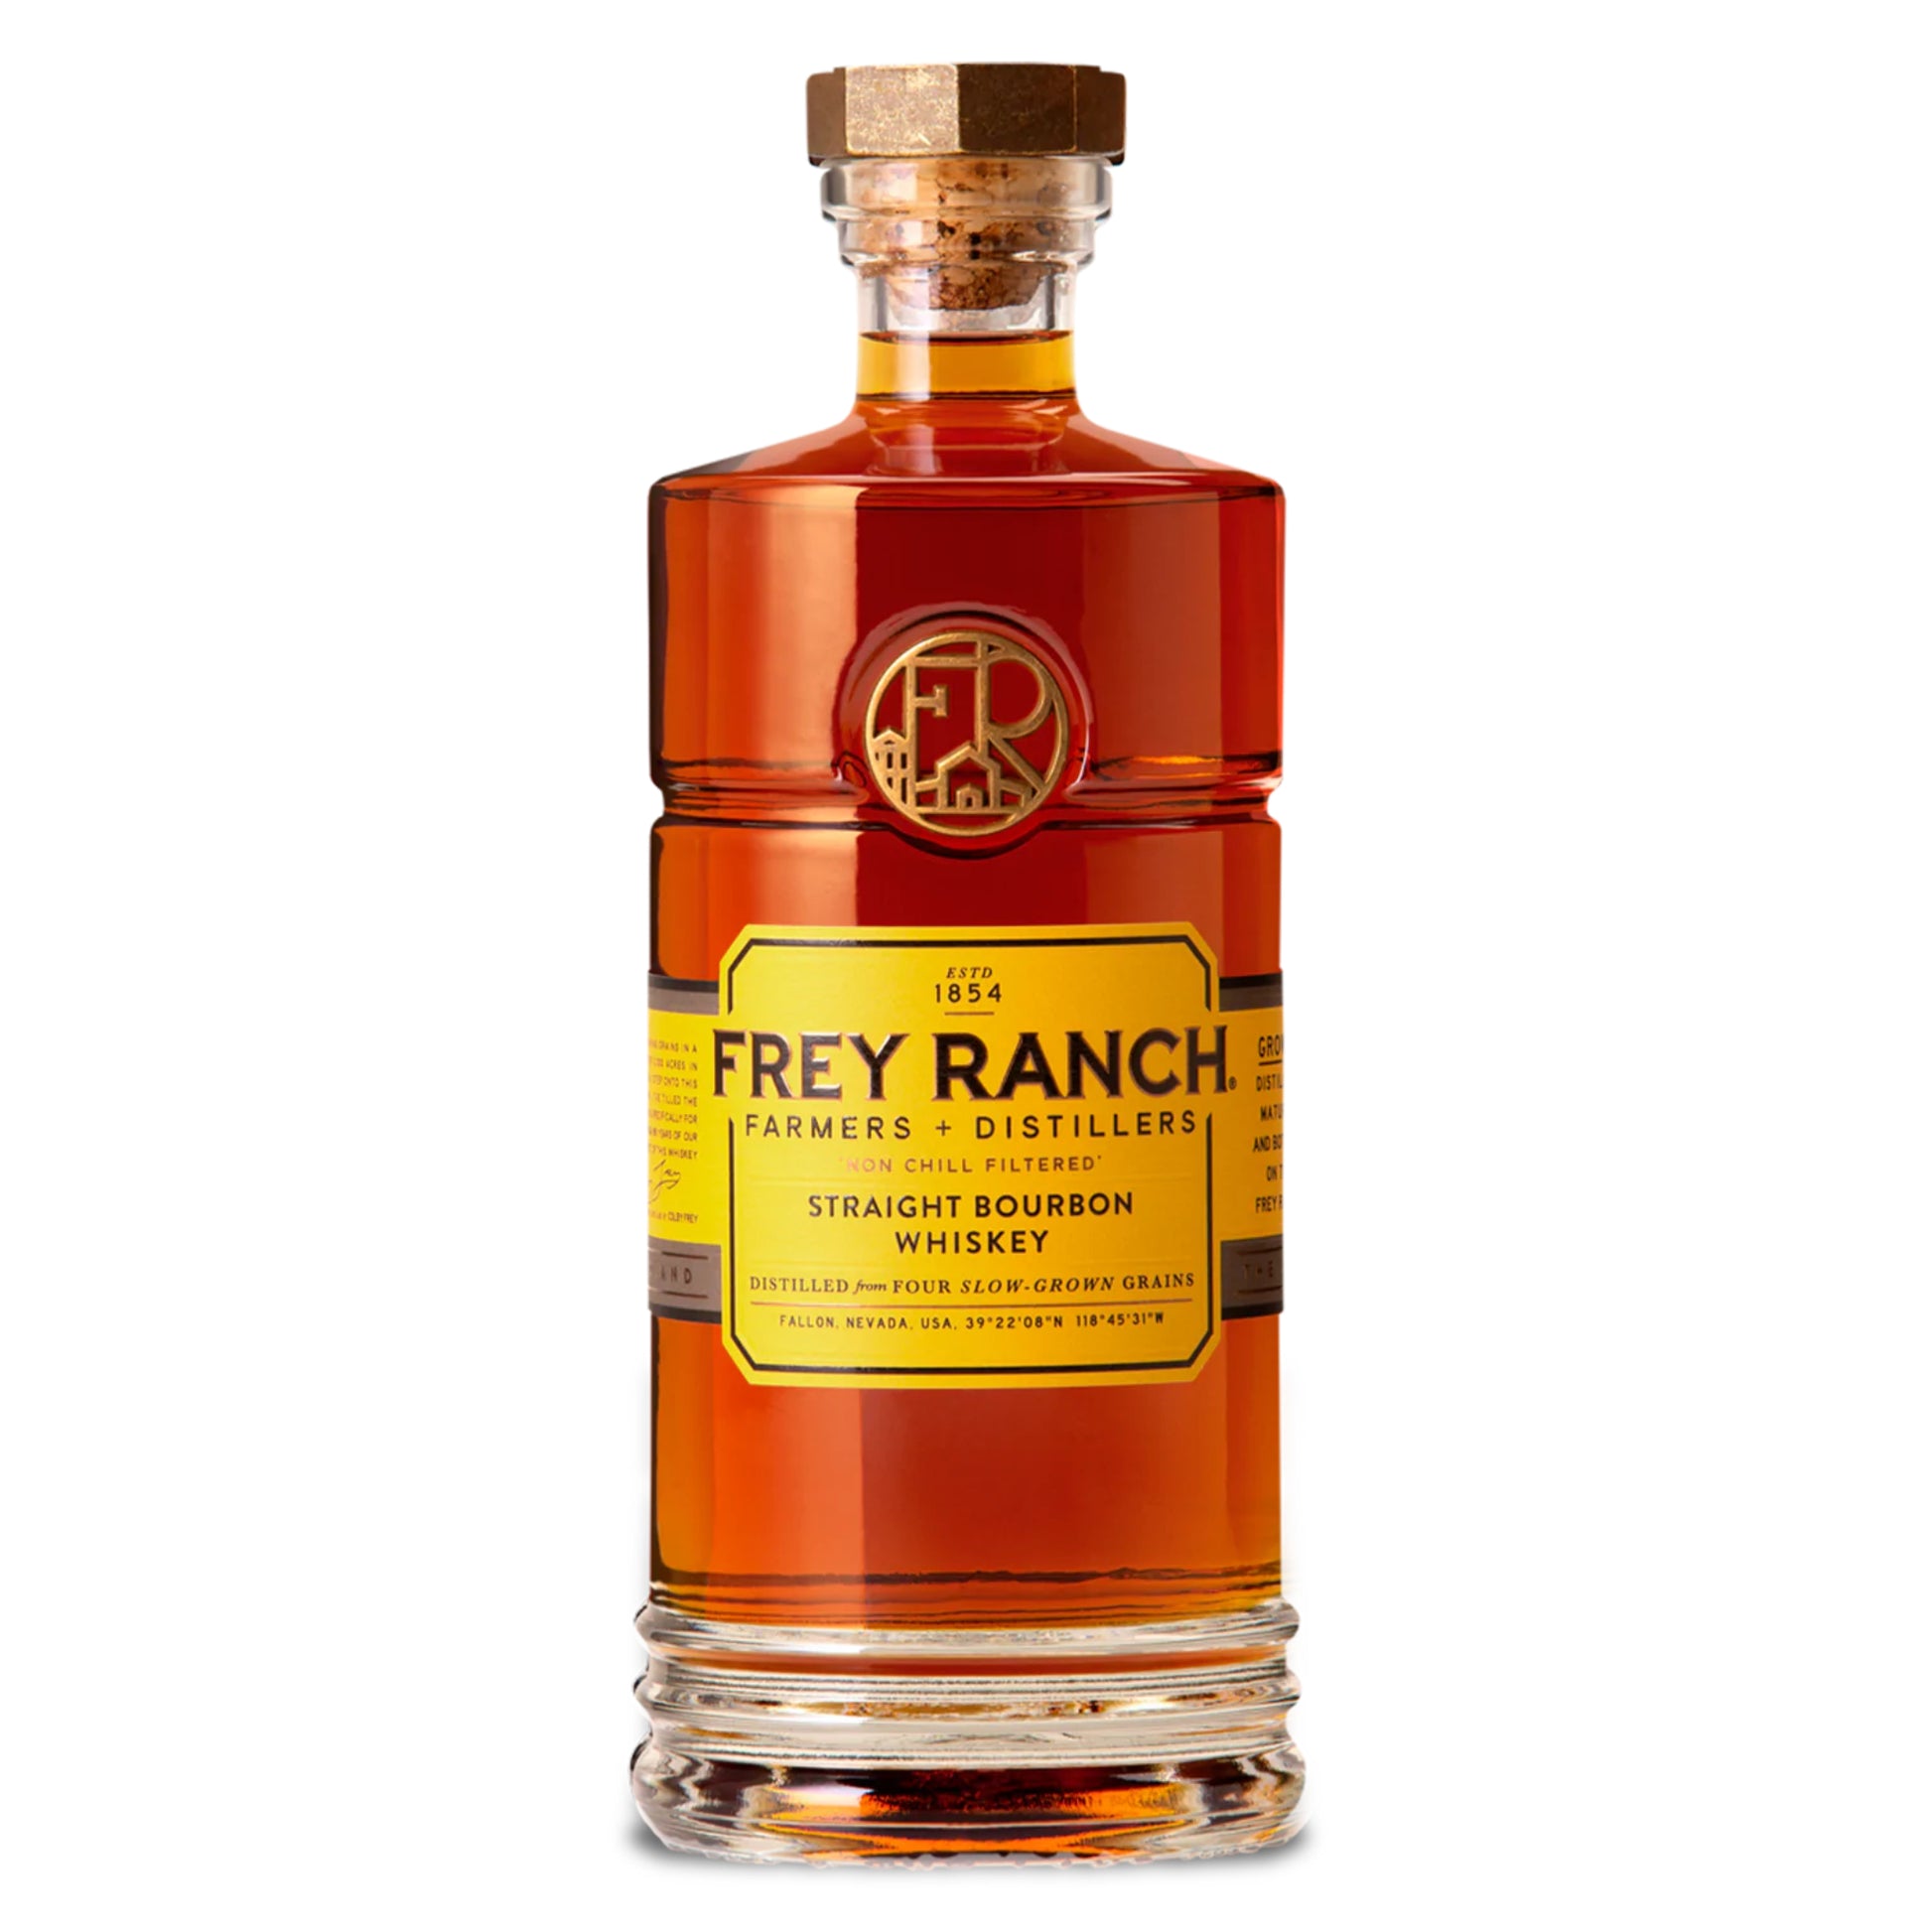 Frey Ranch Straight Bourbon - Liquor Geeks